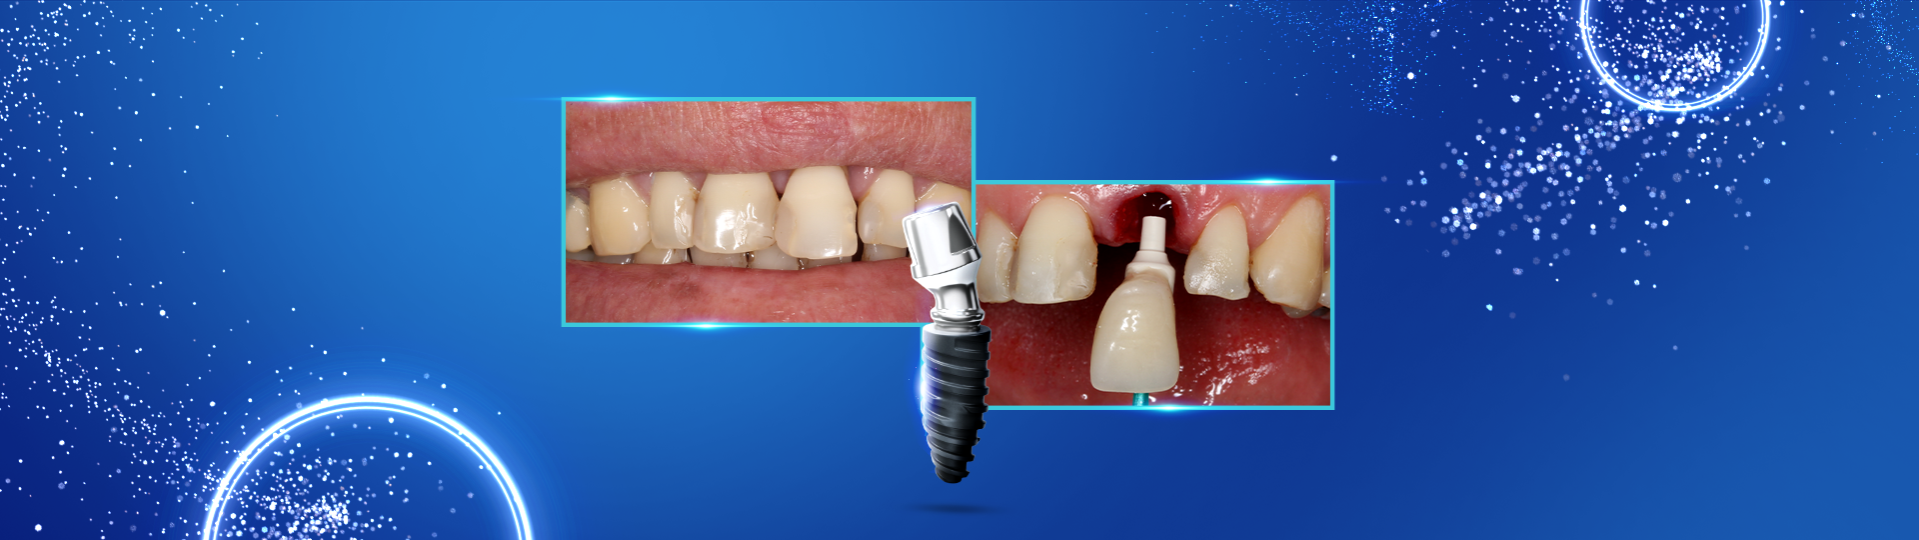 Implante imediato com carga imediata sobre cicatrizador personalizando area peri implantar1 - Implante inmediato con carga inmediata sobre cicatrizador personalizando área peri-implantar.